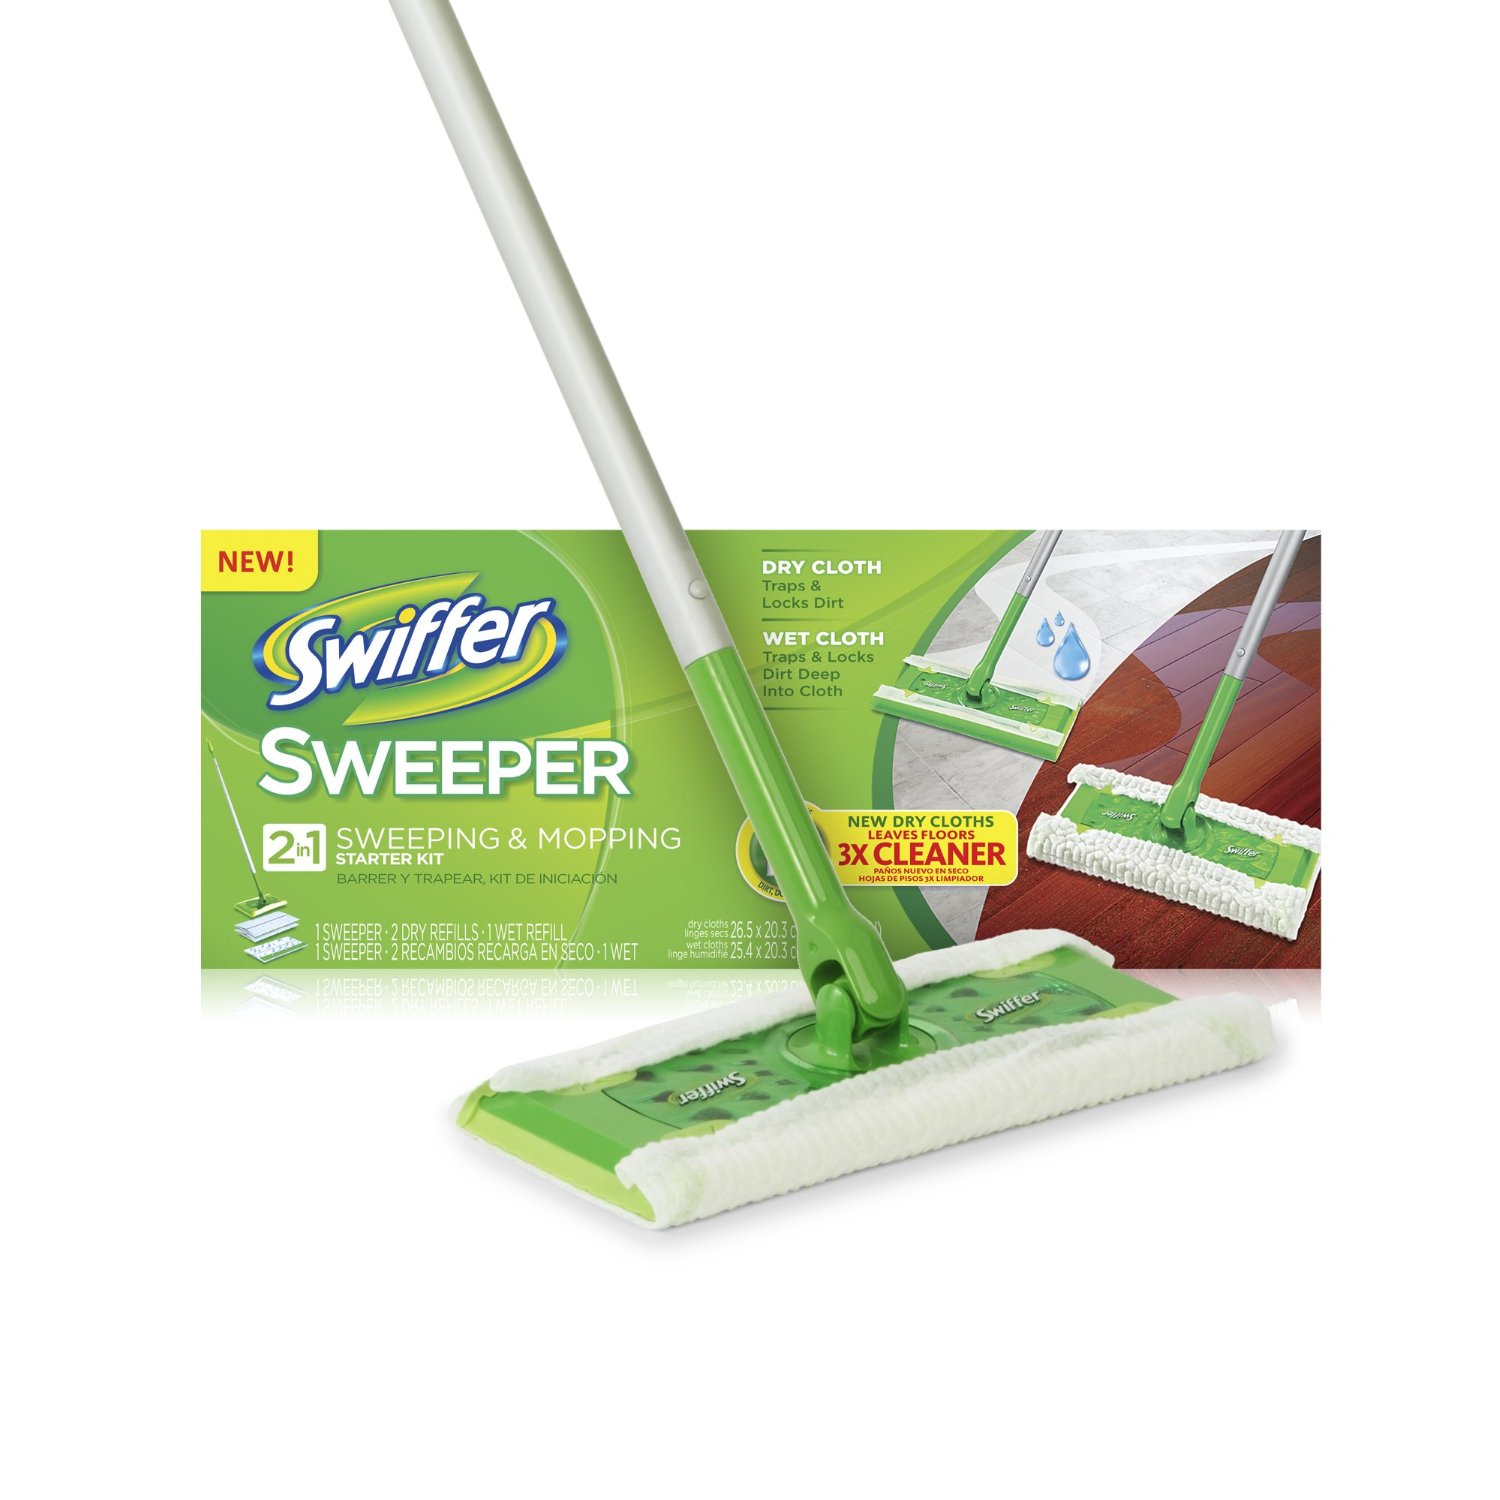 Swiffer Sweeper 2 合 1 拖把套装  $6.99 